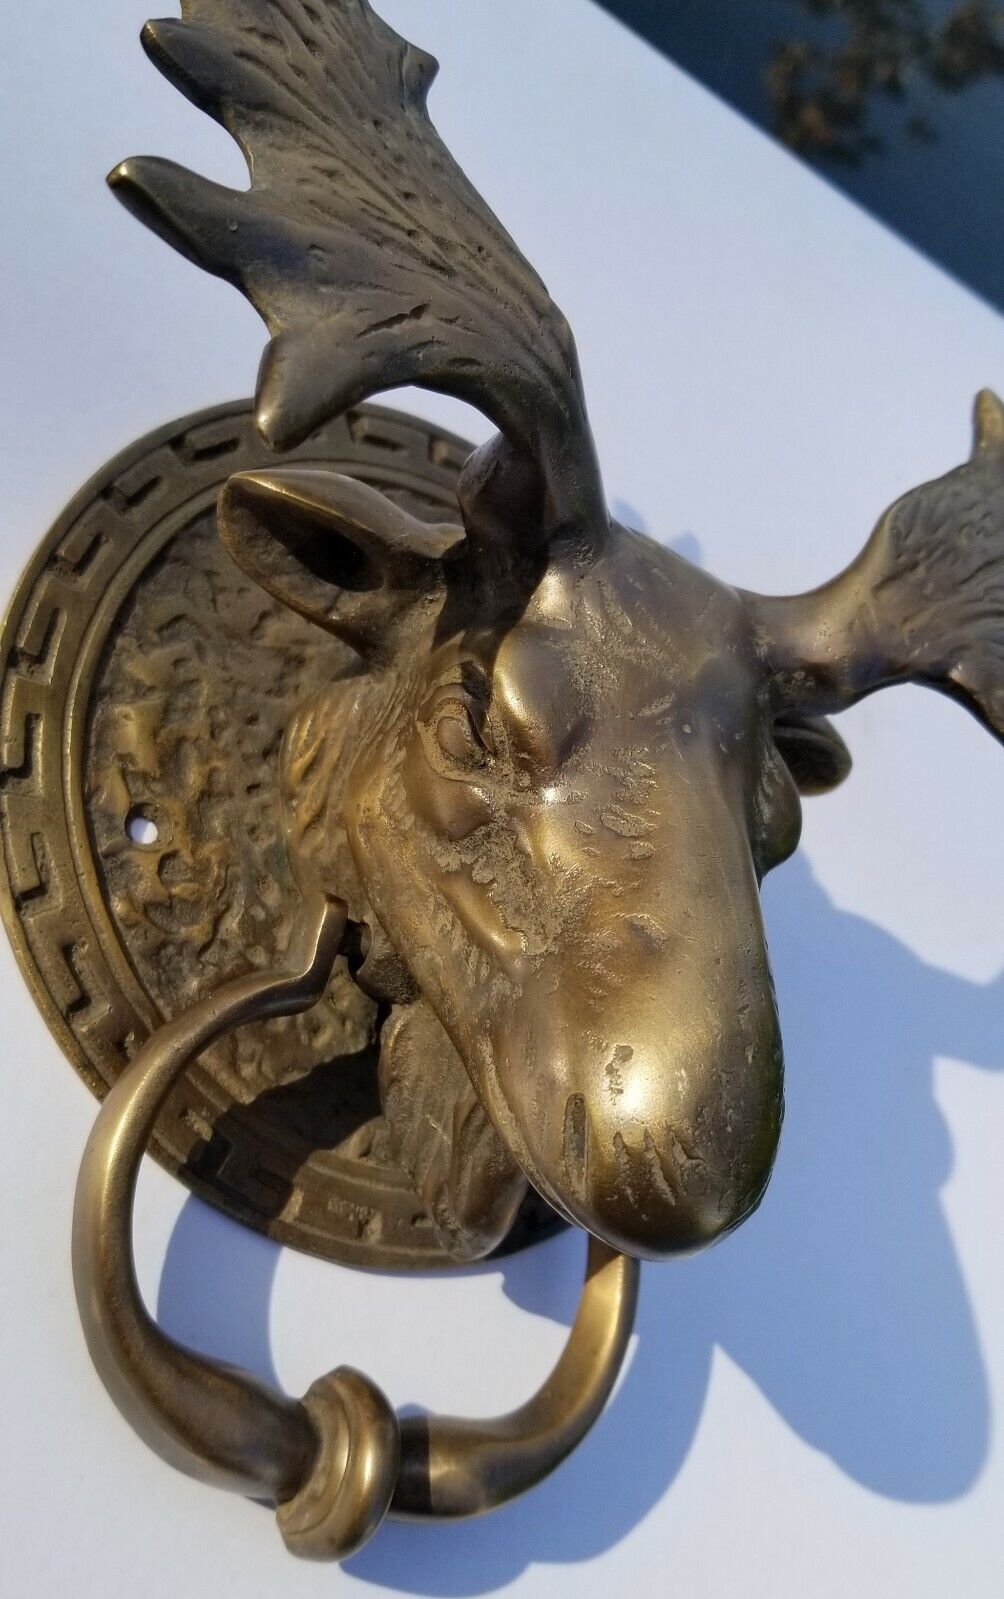 Moose Head Rustic Door Knocker Large Solid Brass, Ornate Detail 8-1/2"  #D5